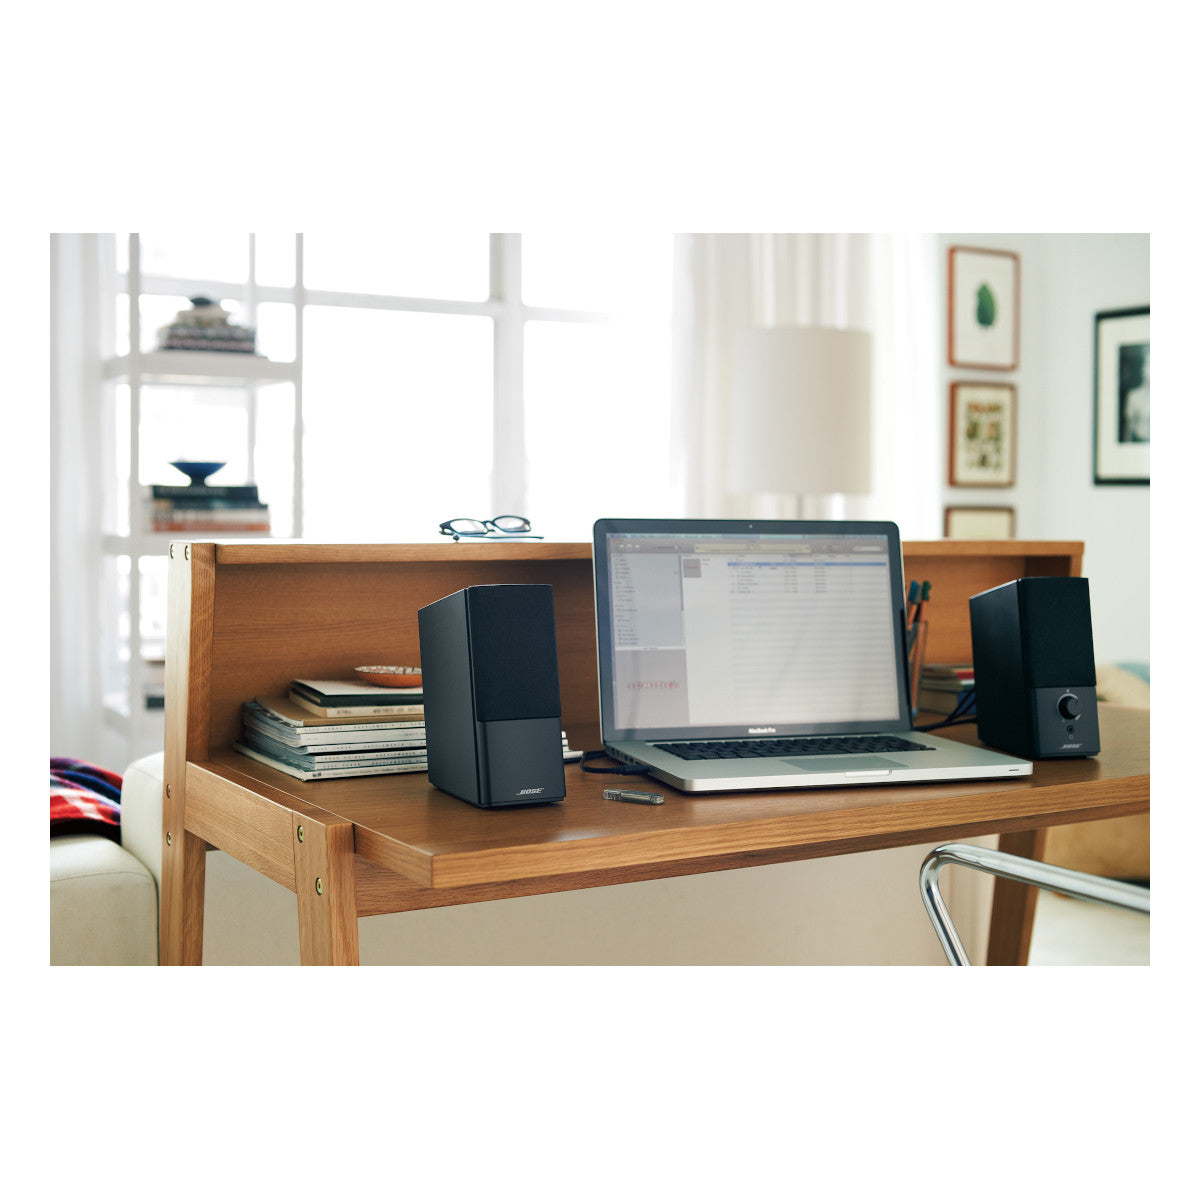 Bose Companion 2 Series III Multimedia Speaker System (Black)